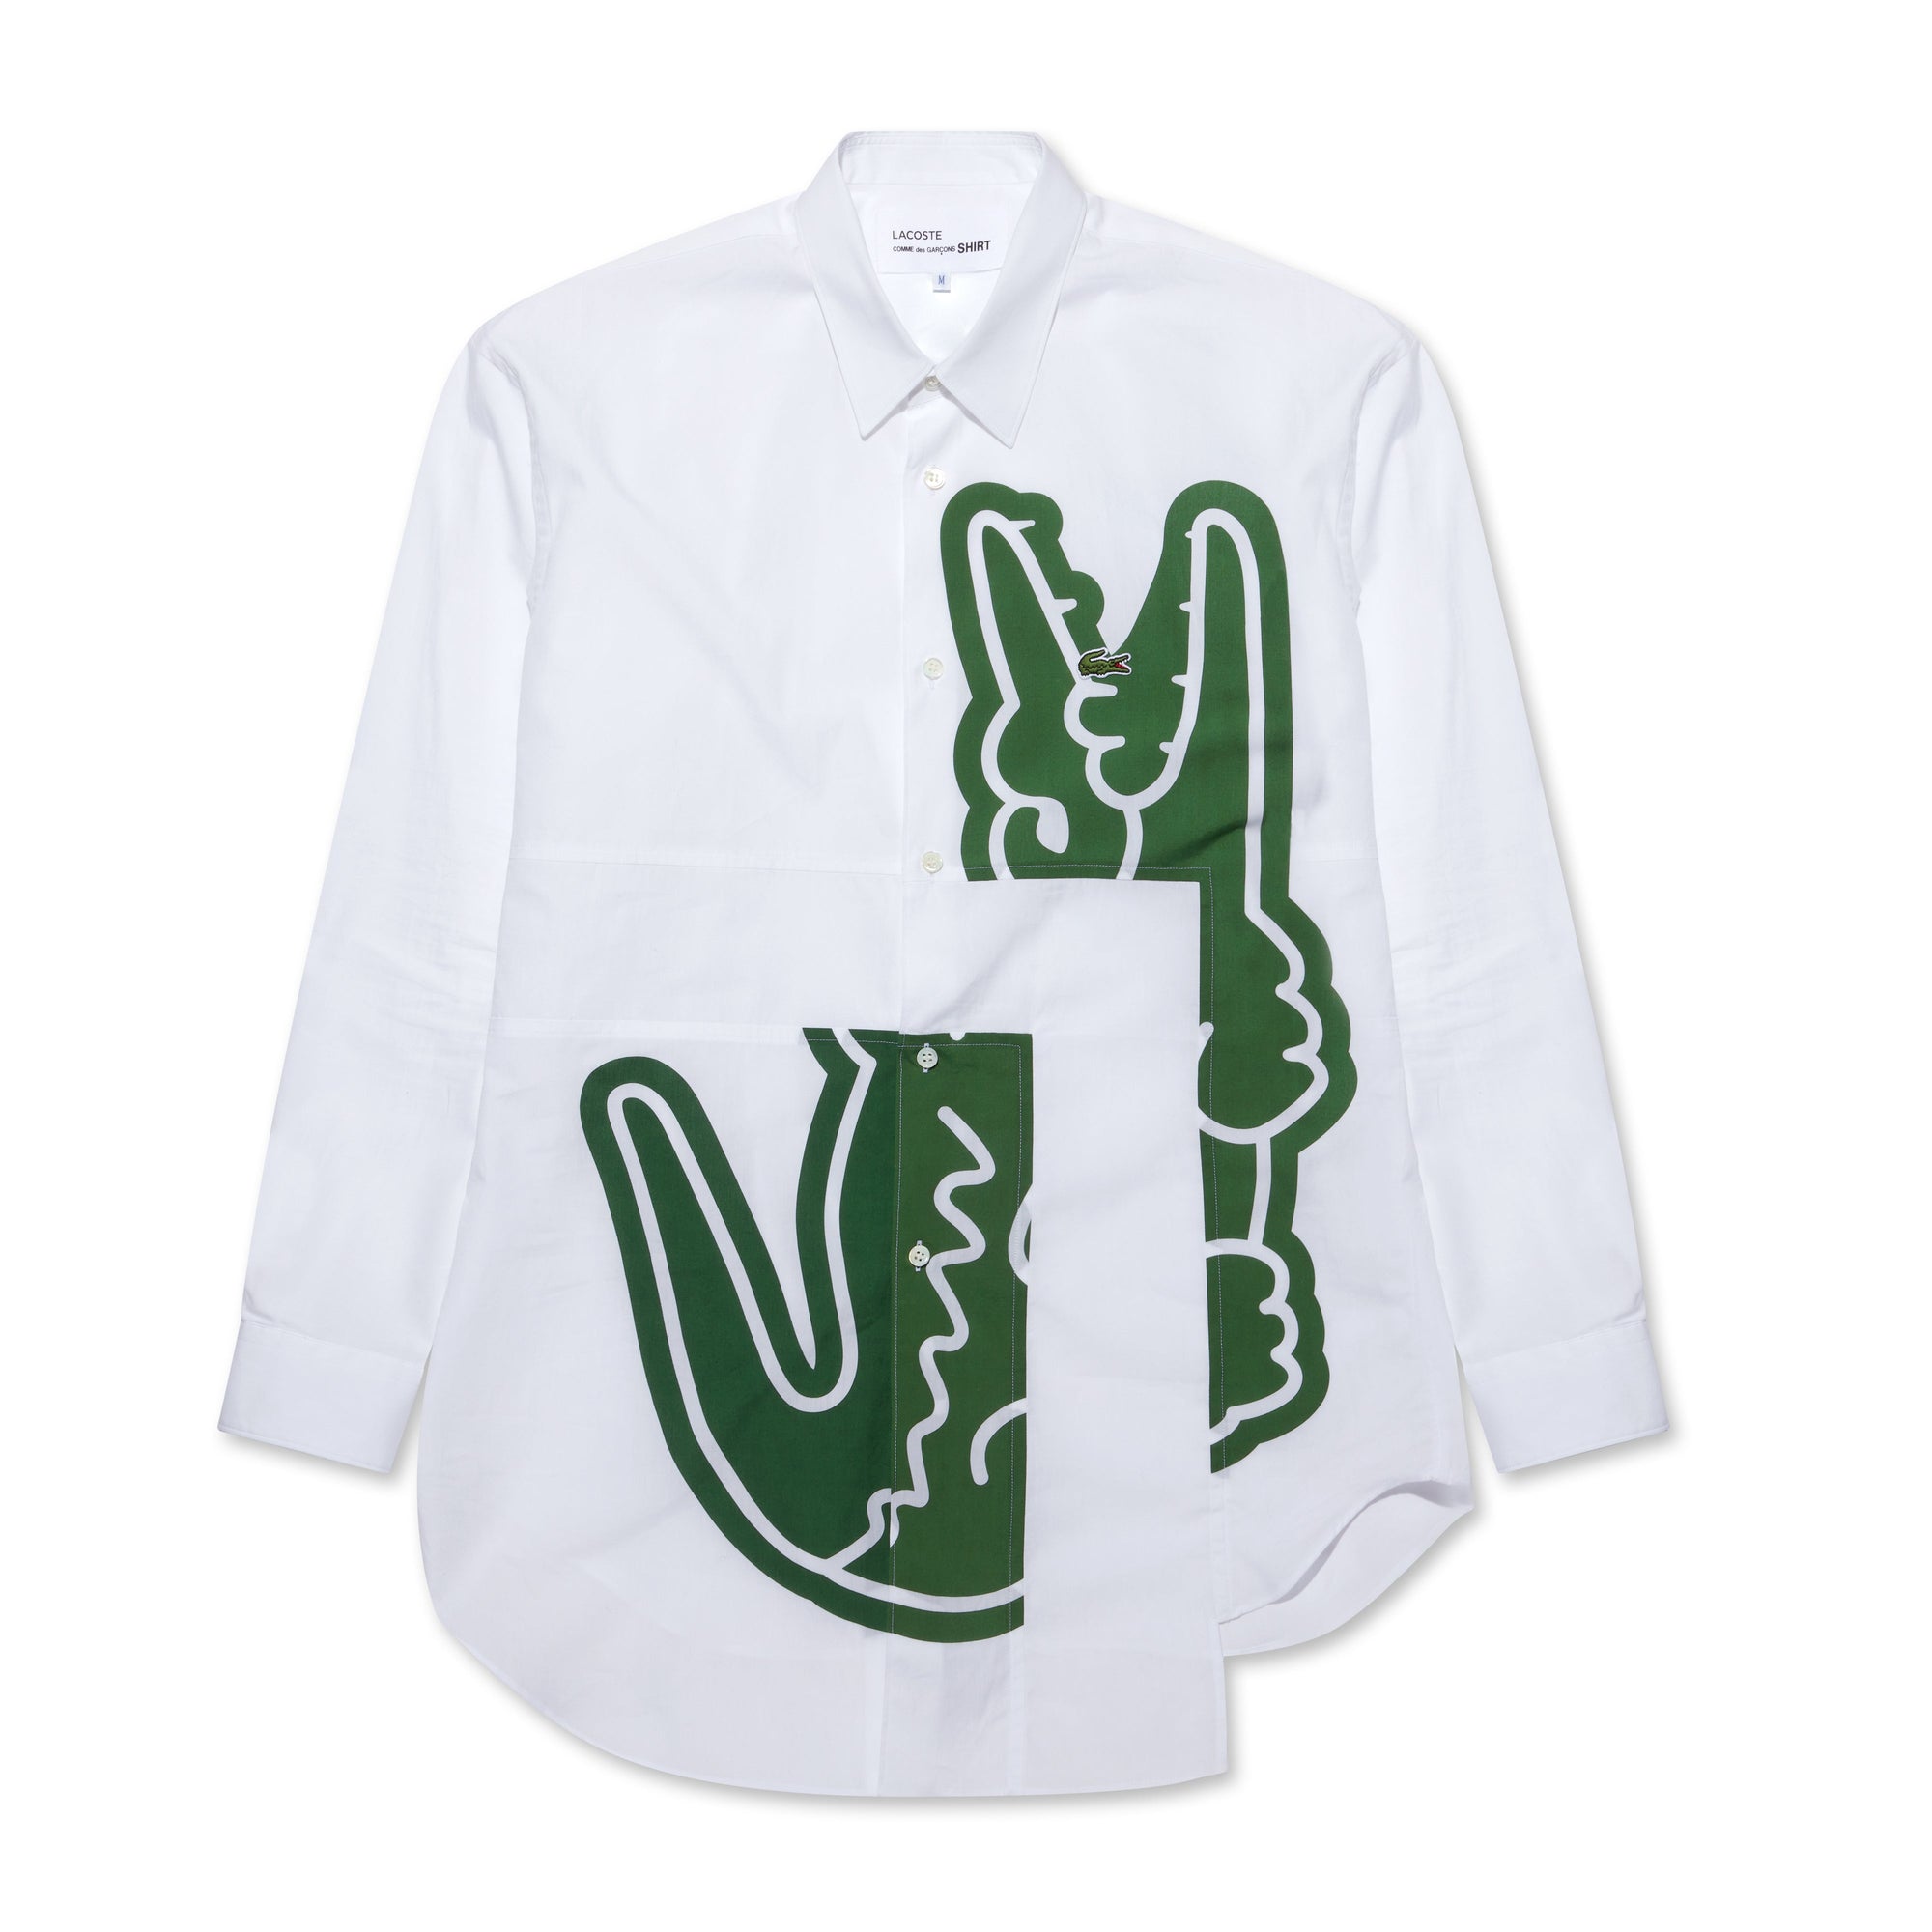 CDG Shirt - Lacoste Men's Shirt - (White) view 6